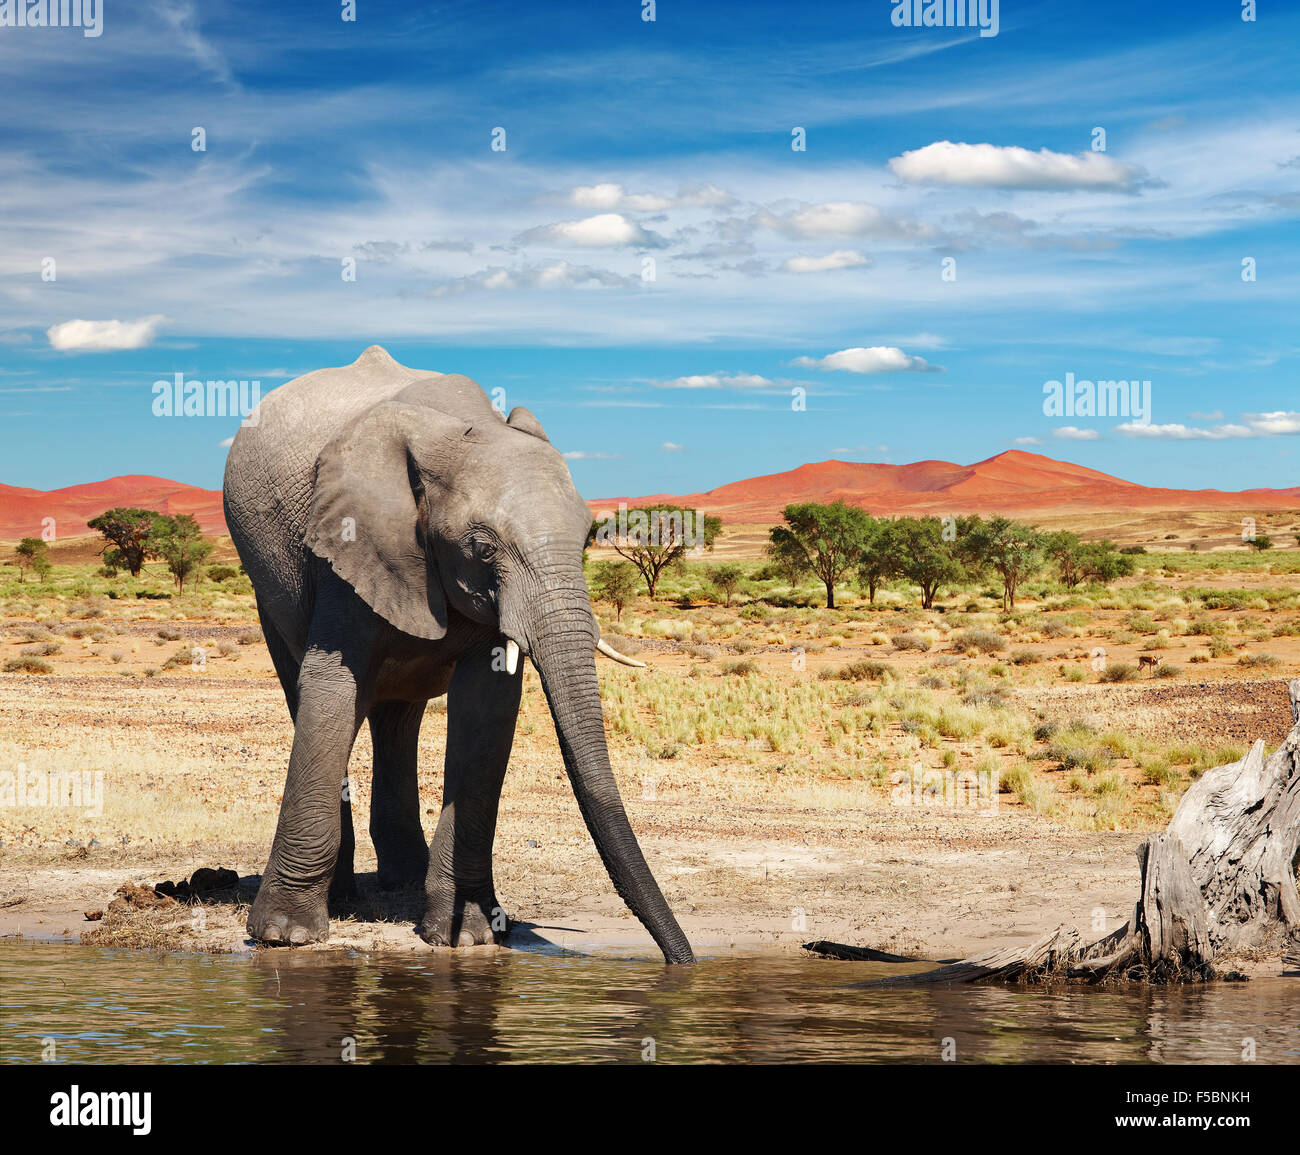 Drinking elephant in african savanna Stock Photo